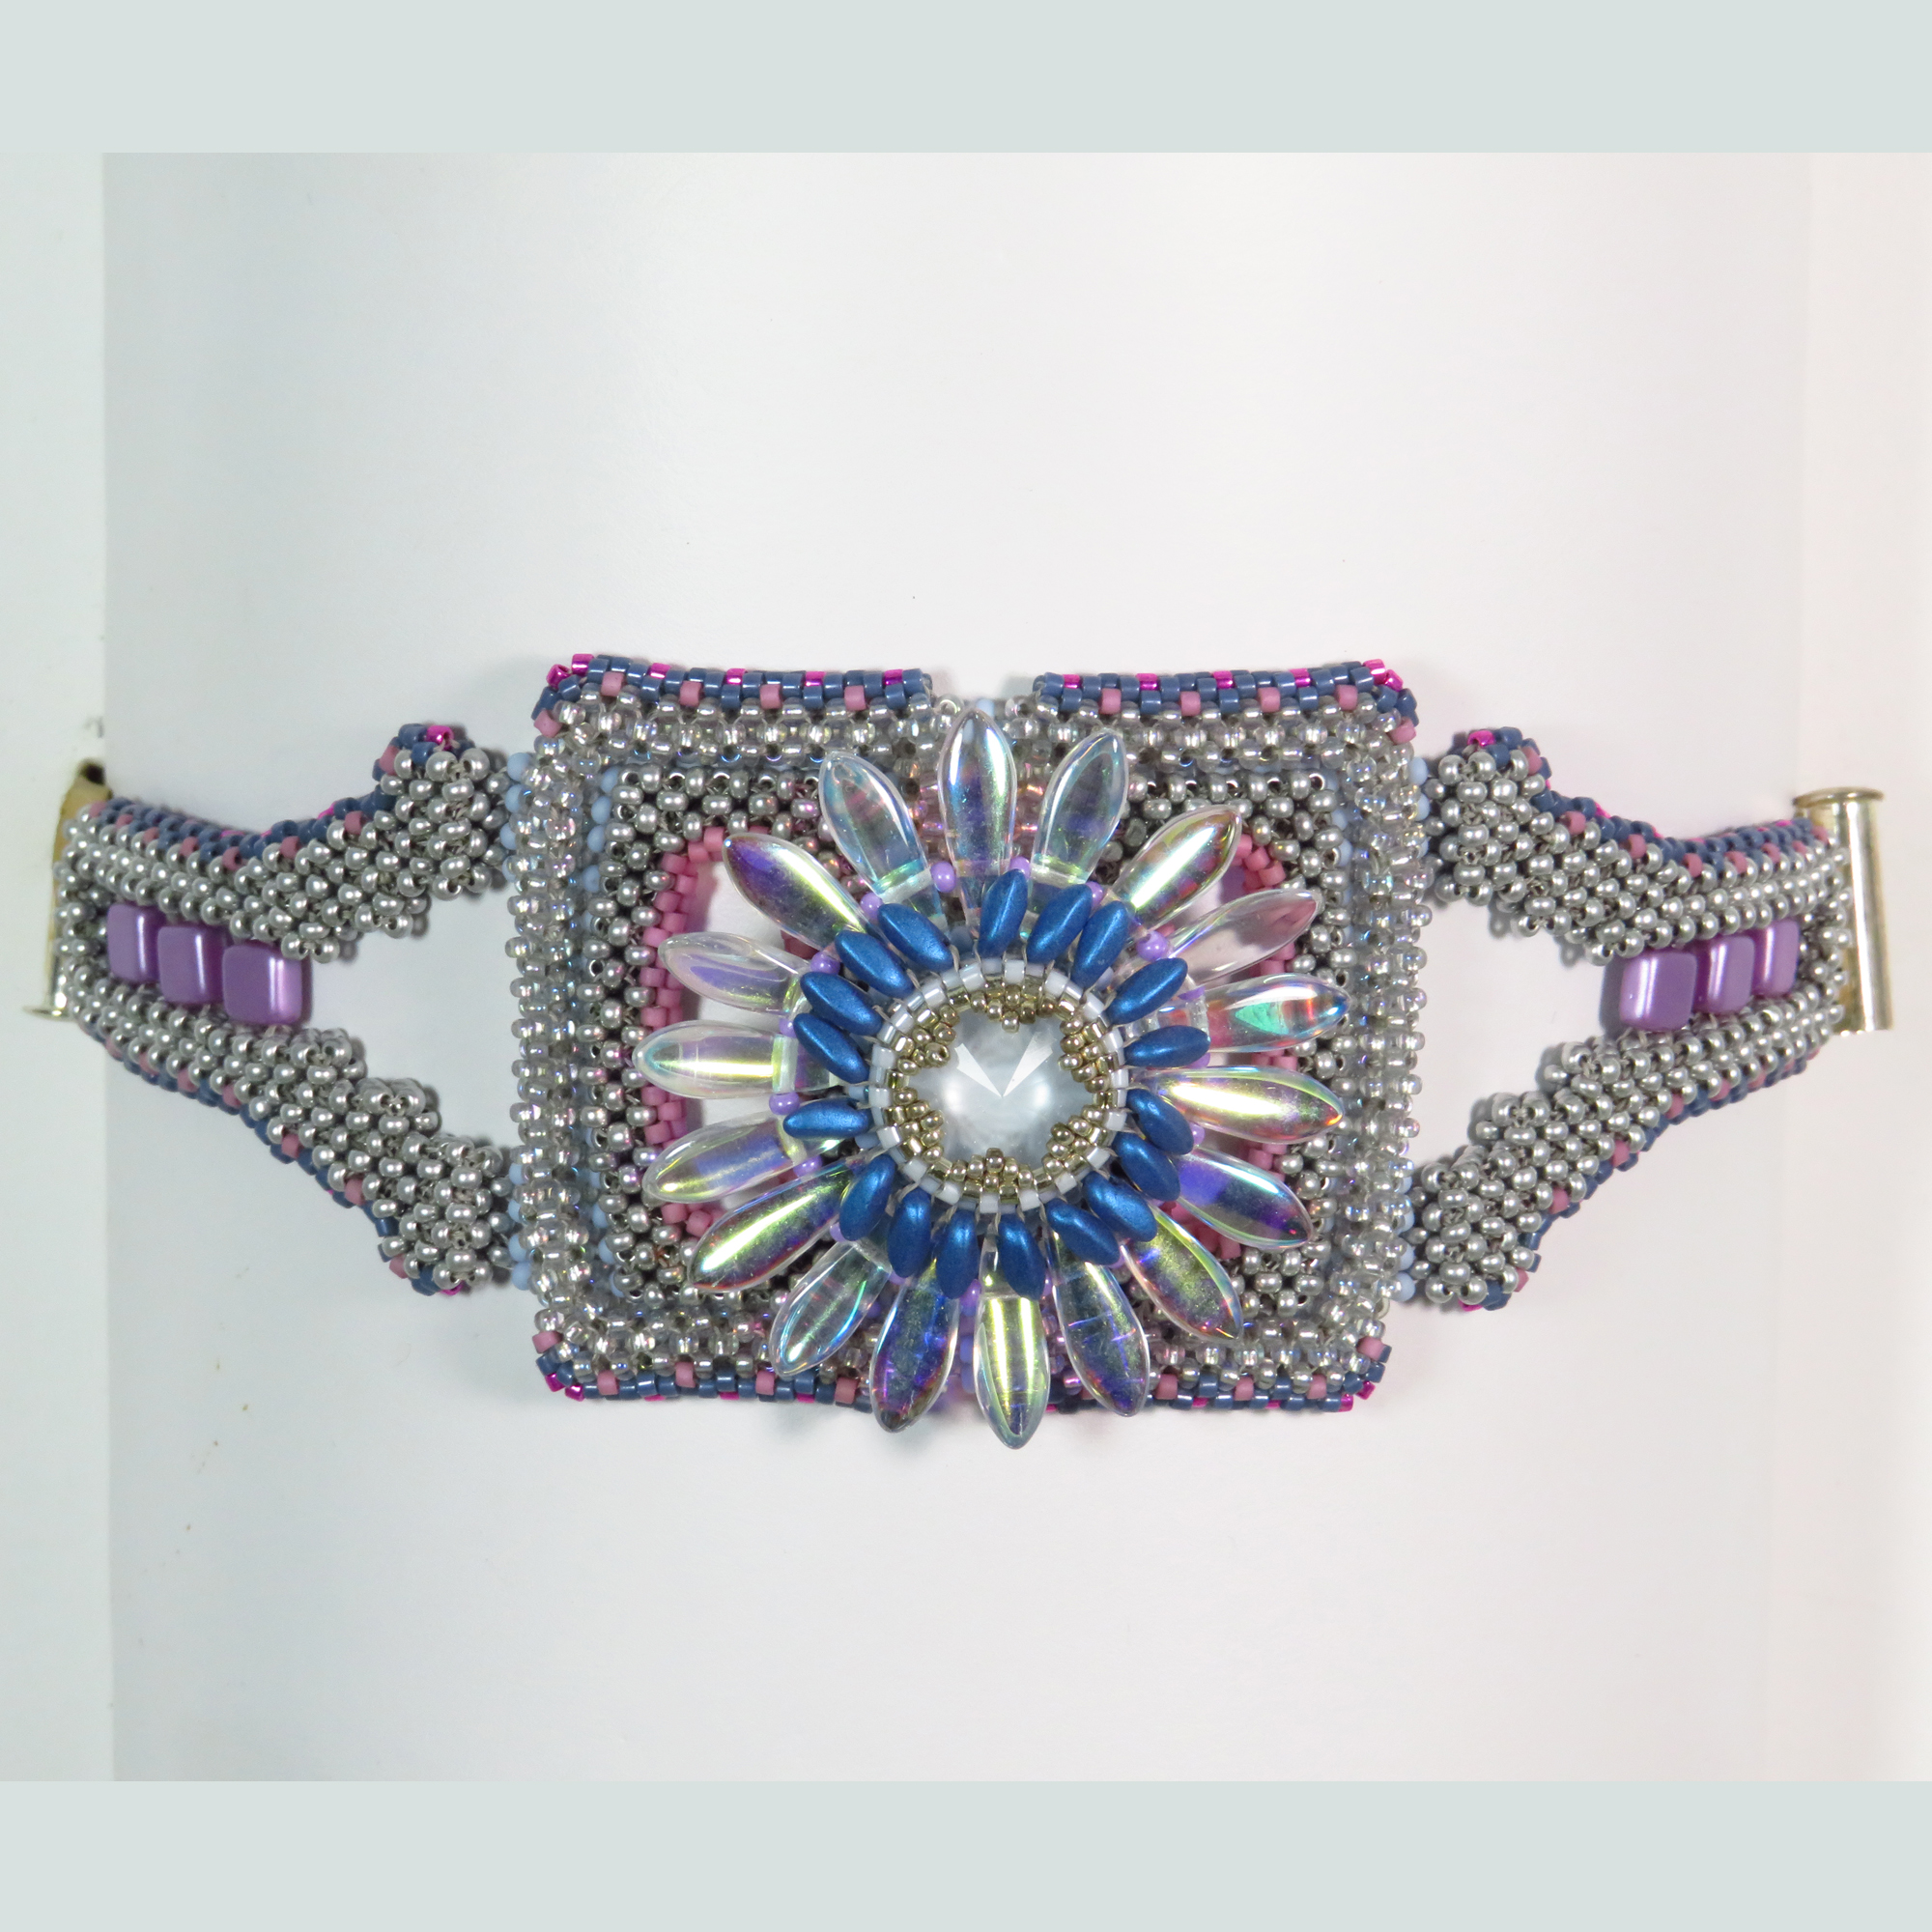 Geometric silver flower beaded cuff bracelet by Bonnie Van Hall